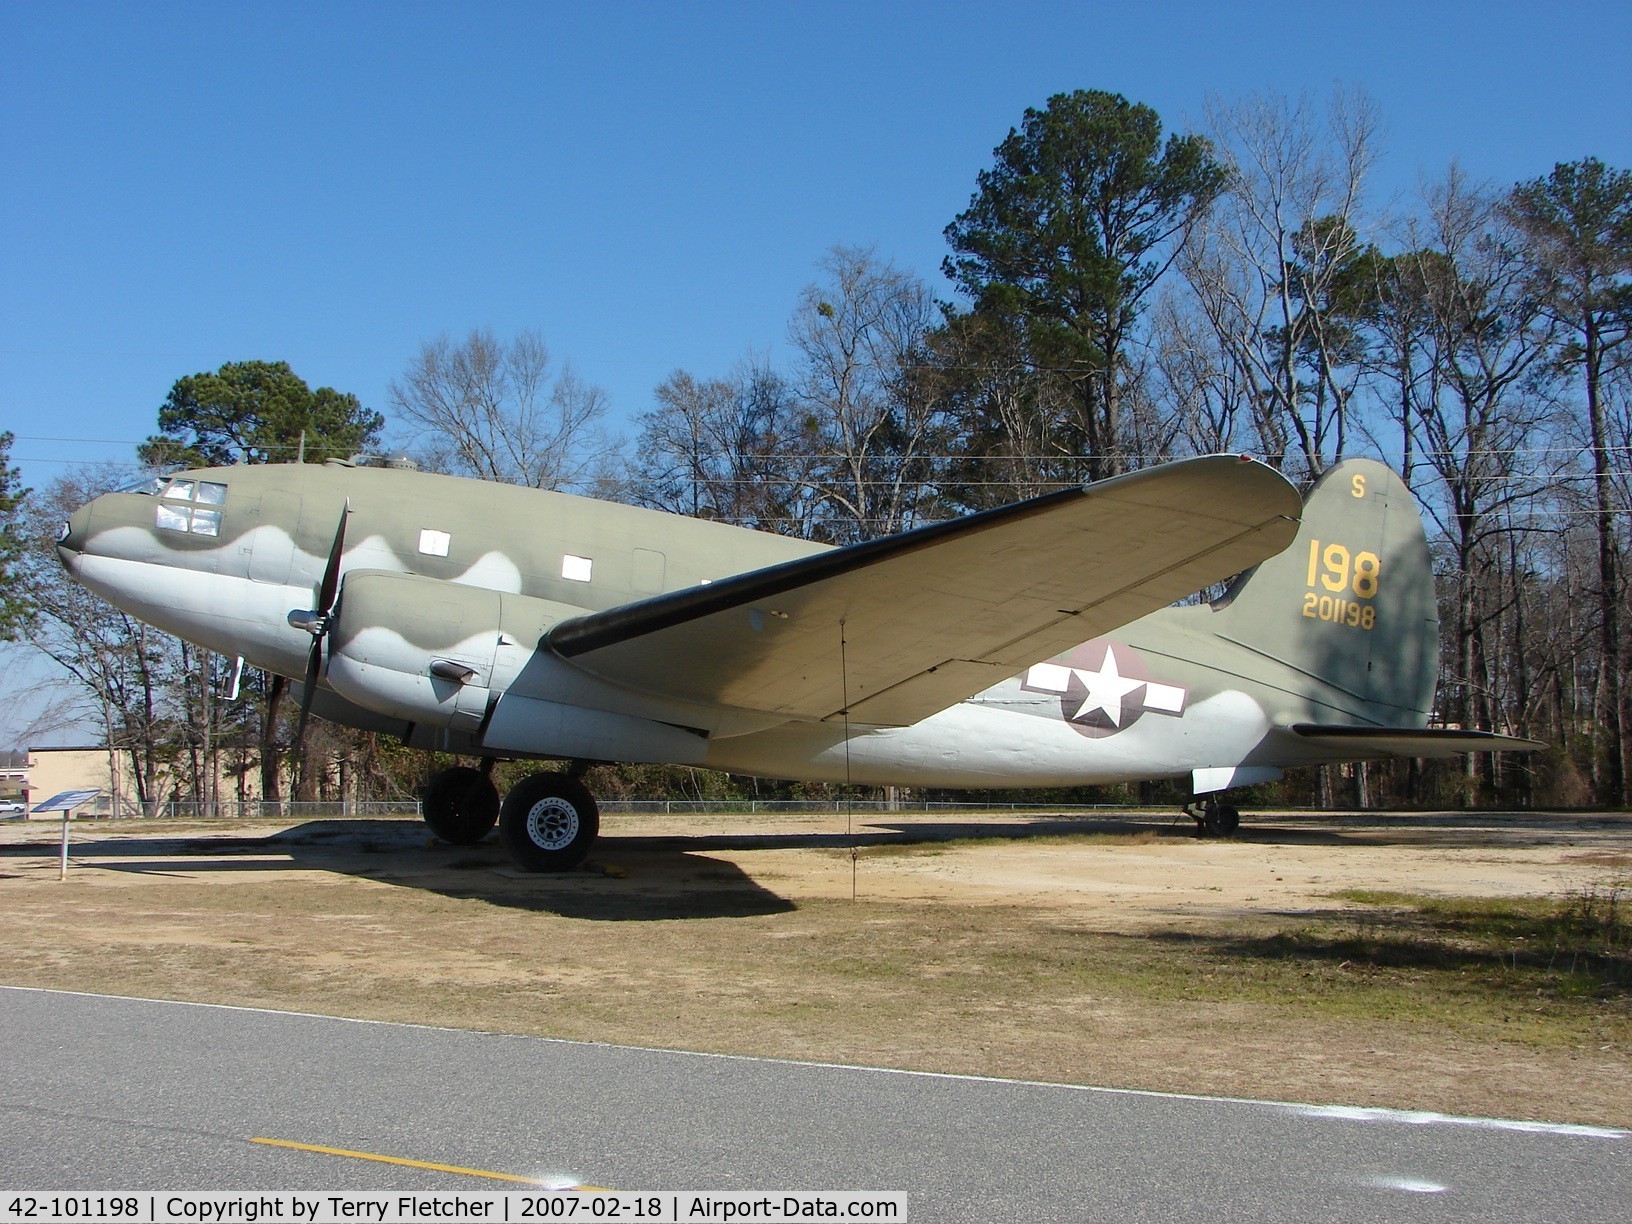 42-101198, 1942 Curtiss C-46D-50-CU Commando C/N 30653, Wonderful exhibits at the superb Warner Robbins Museum in Georgia